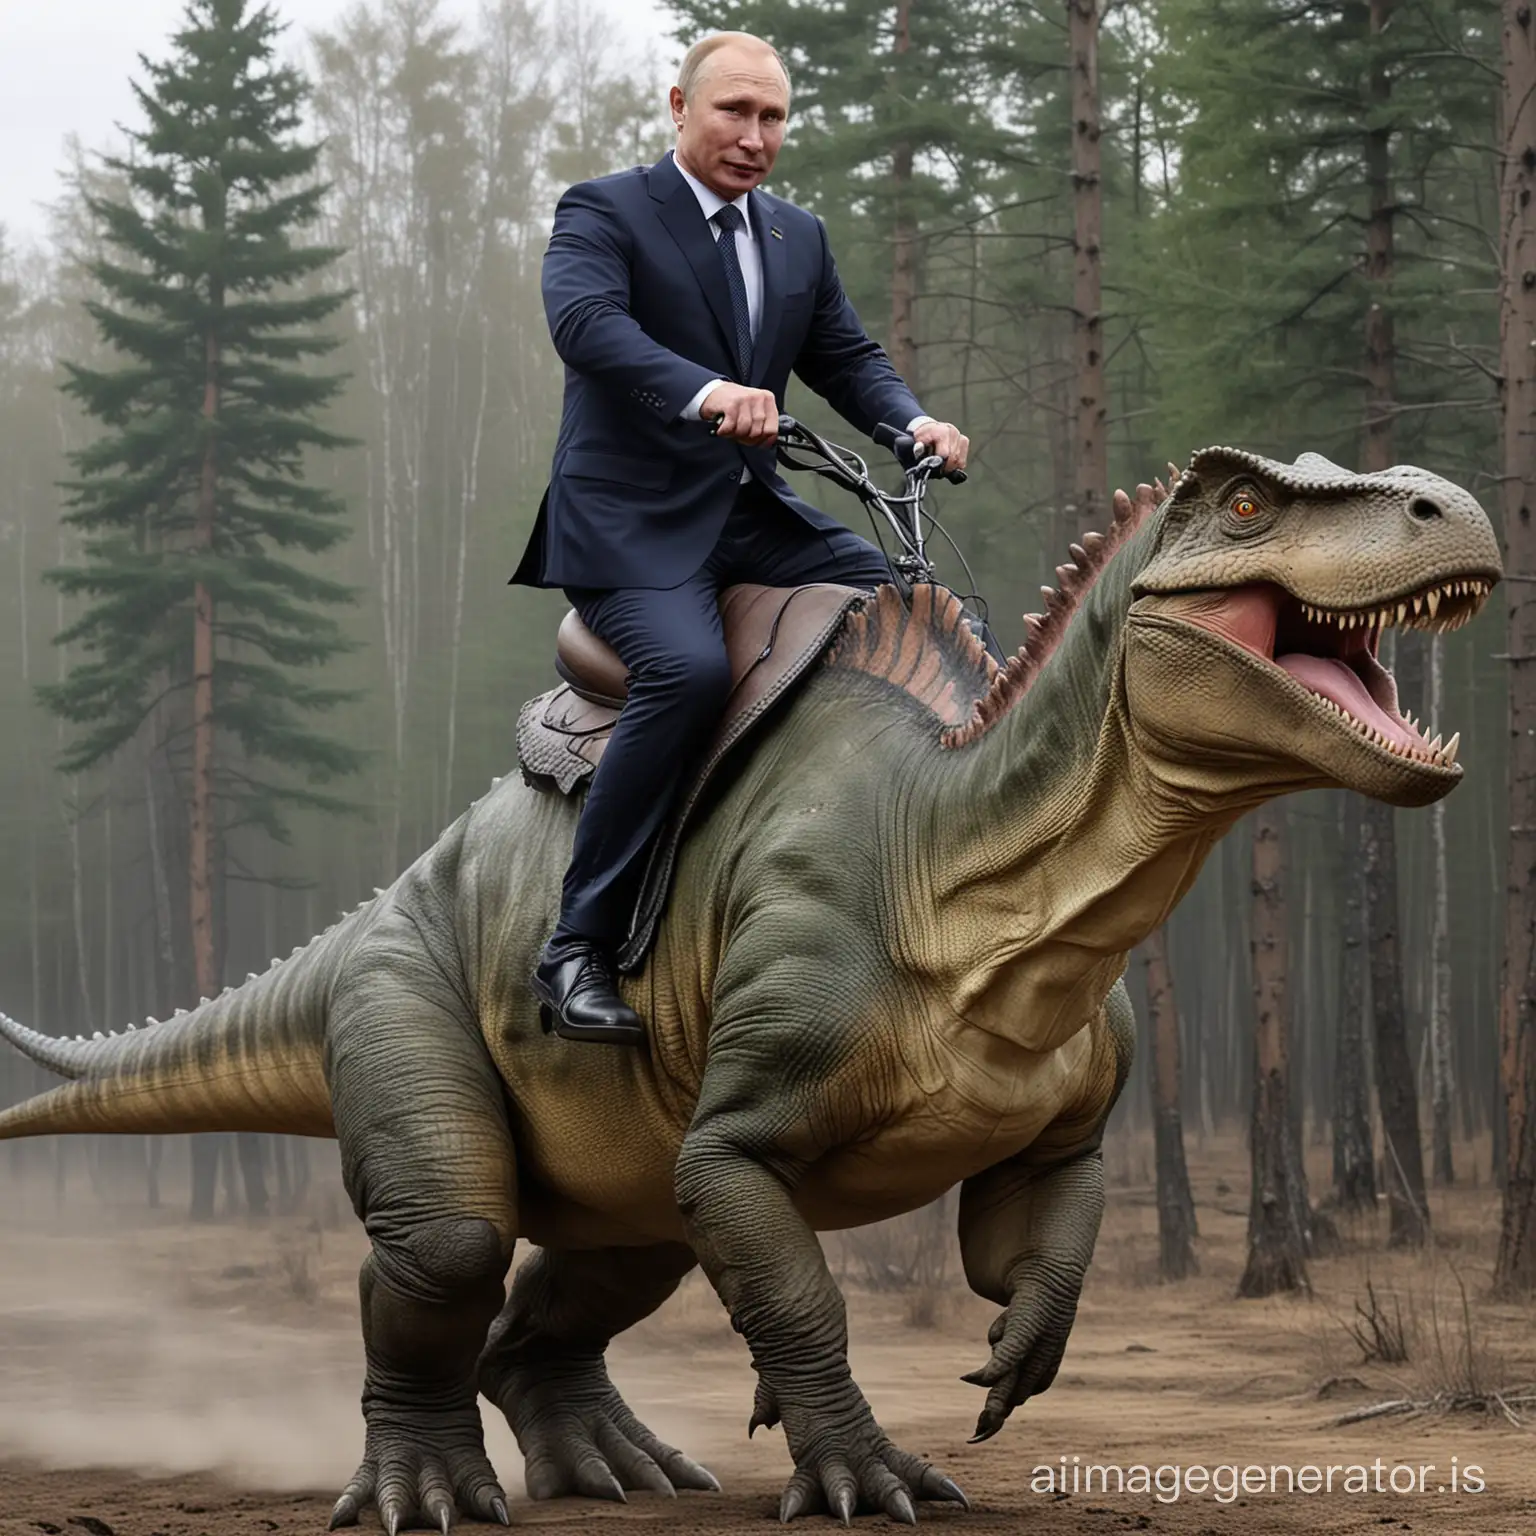 Putin ridding dinosaur 